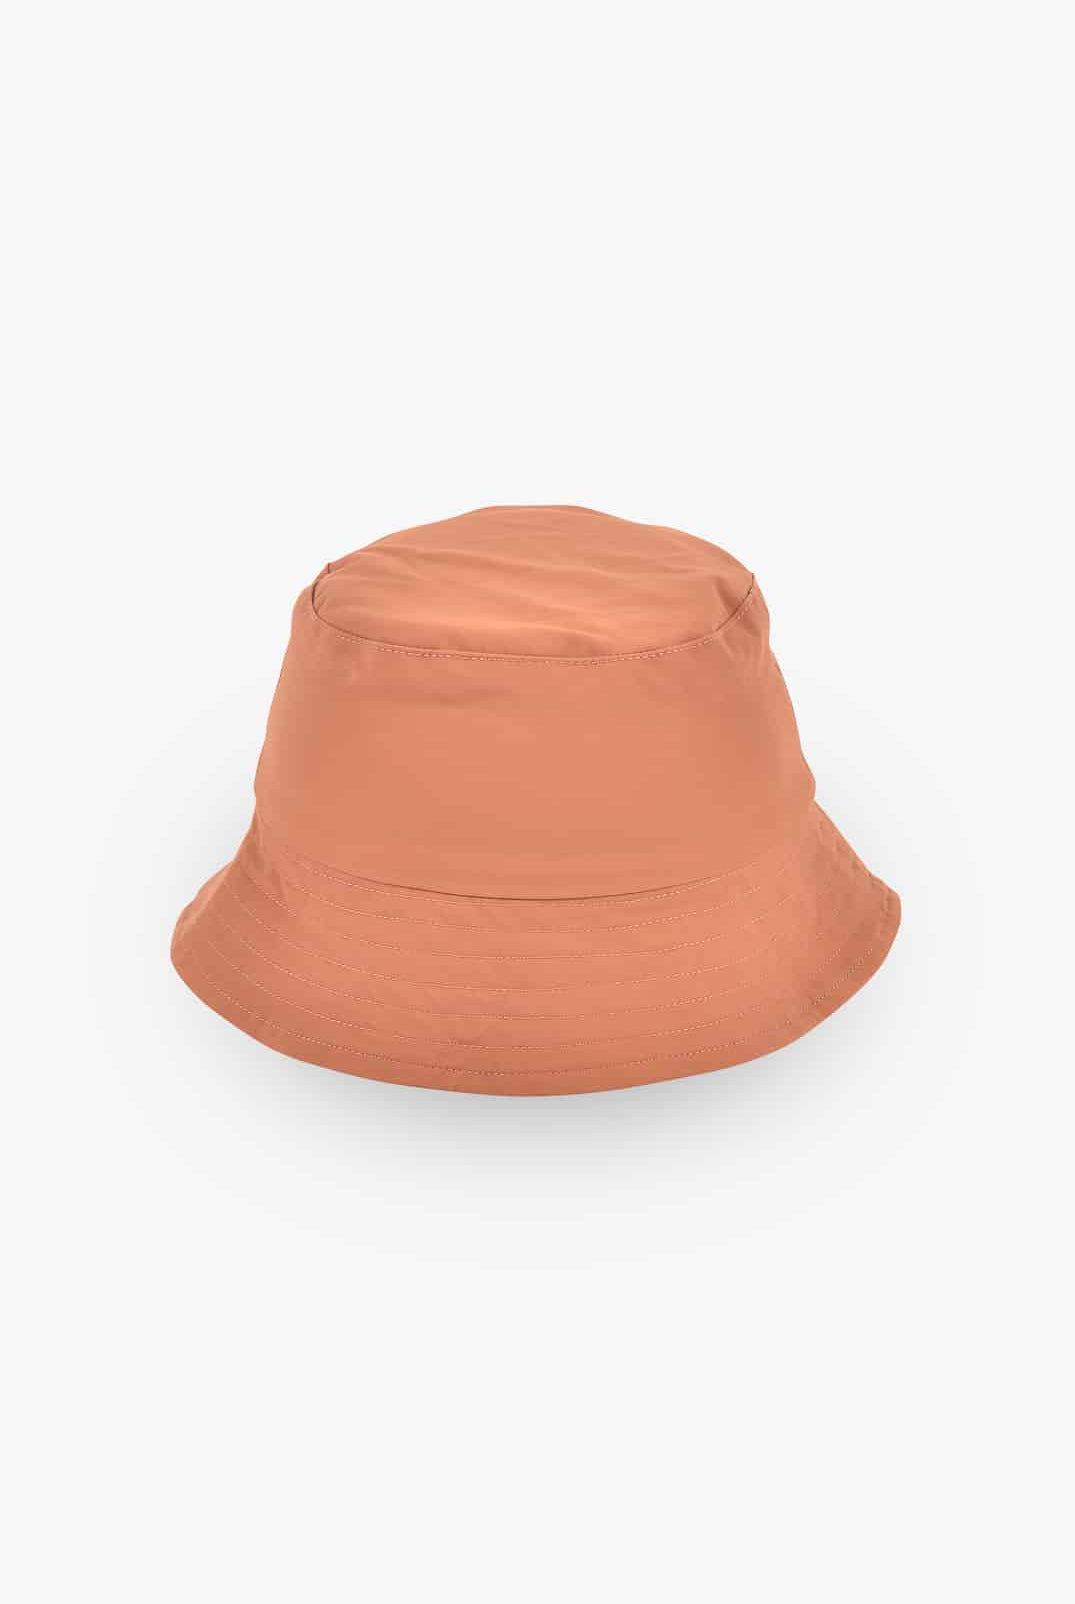 MAIN Mini Kids bucket hat in caramel